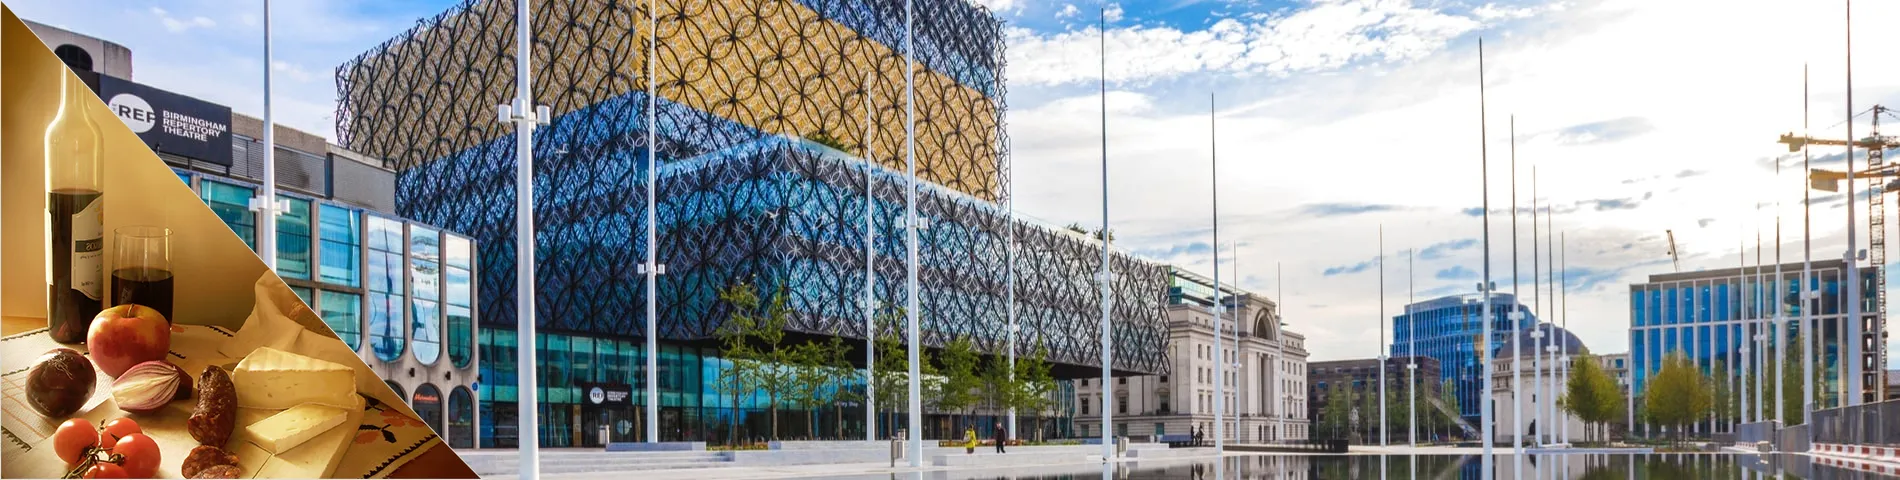 Birmingham - Angličtina a Kultura